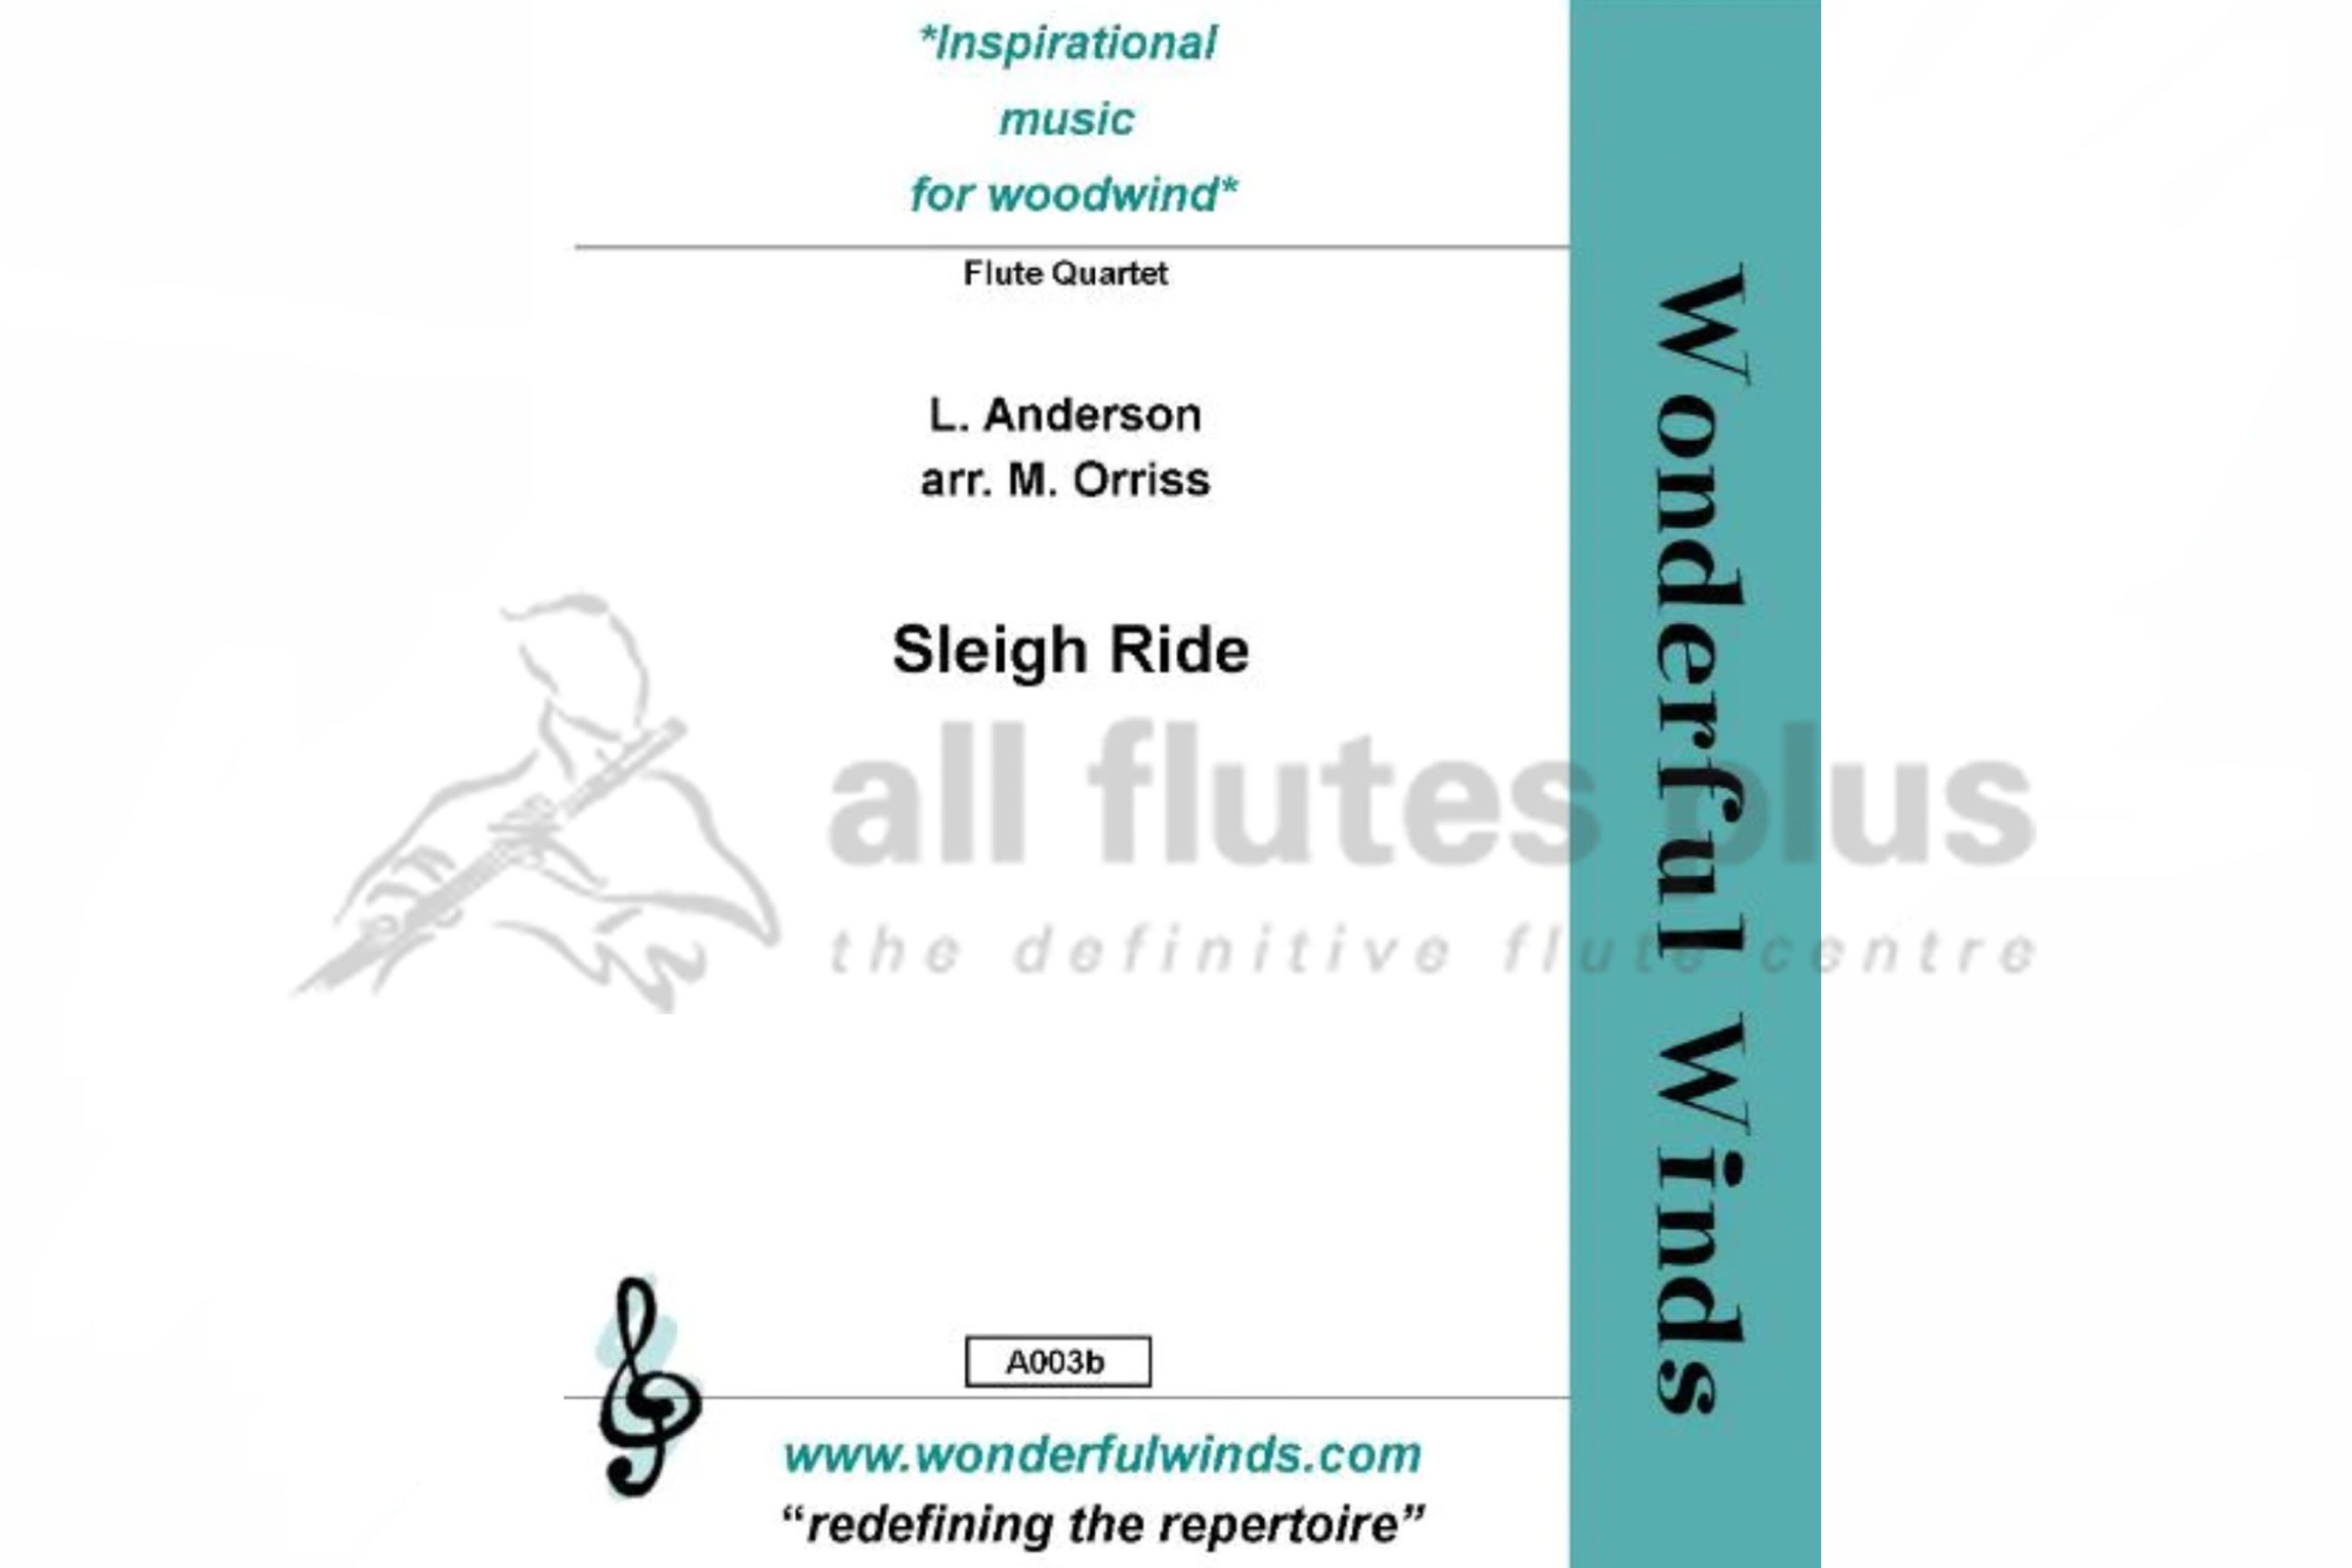 Sleigh Ride for Mixed Flute Quartet